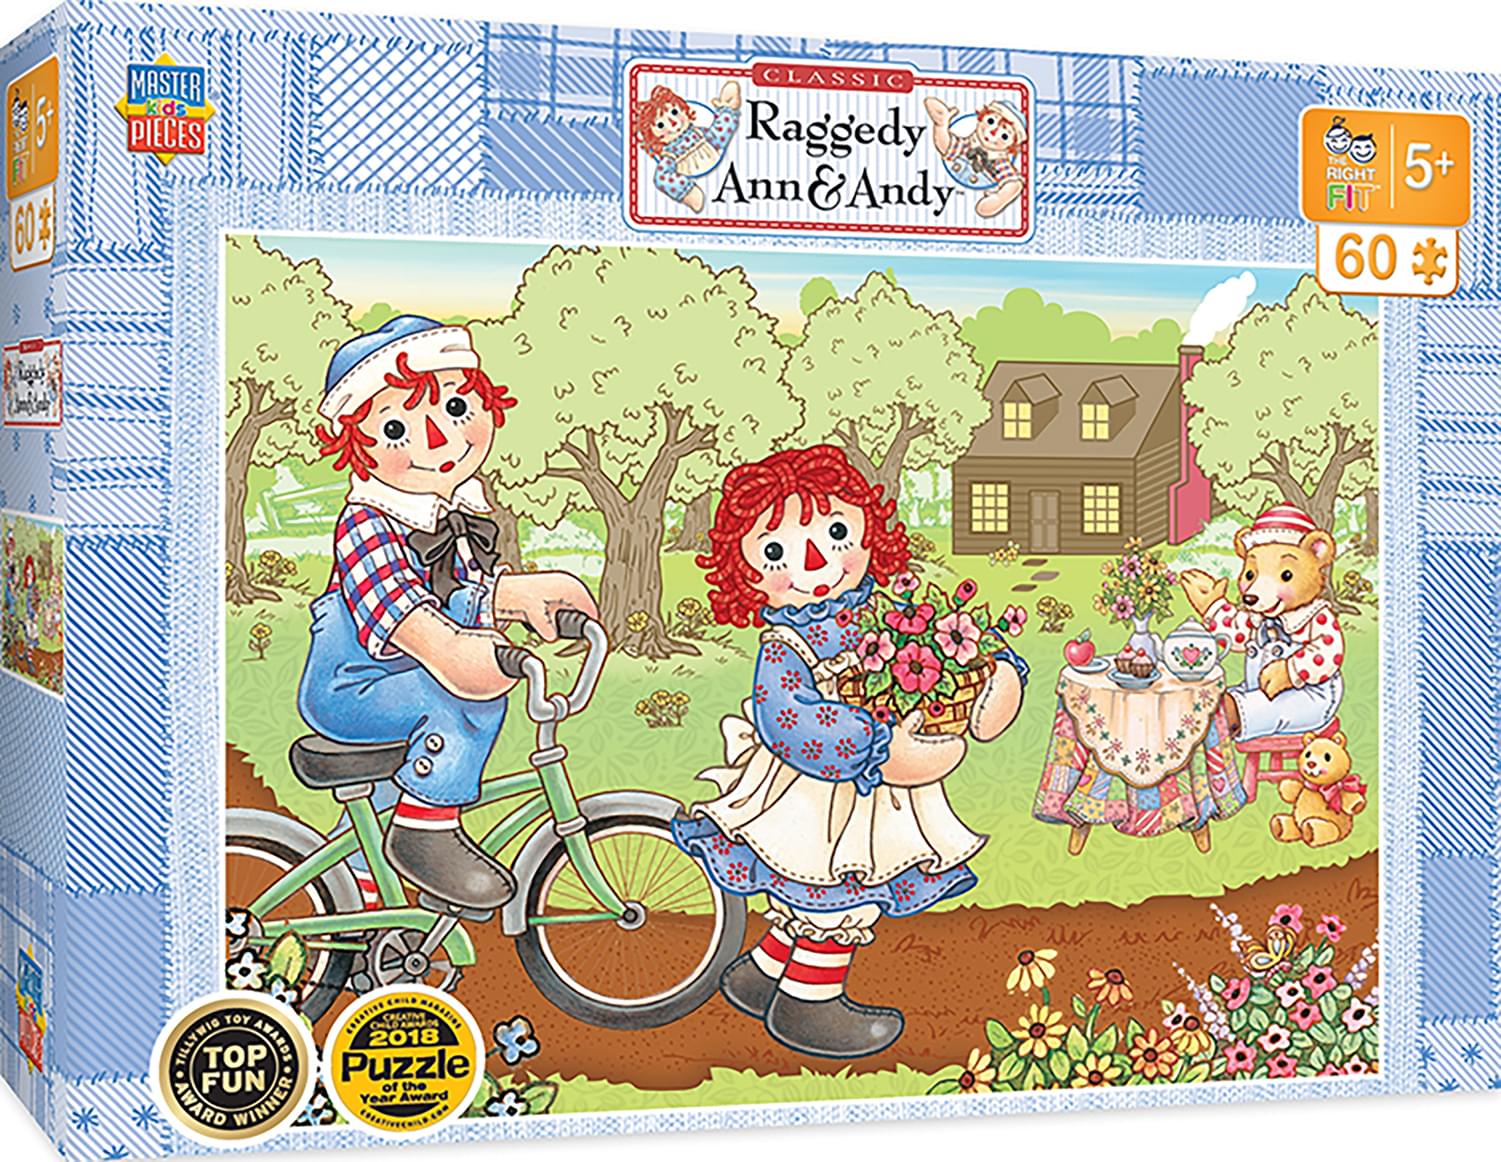 Raggedy Ann & Andy Bike Ride 60 Piece Jigsaw Puzzle